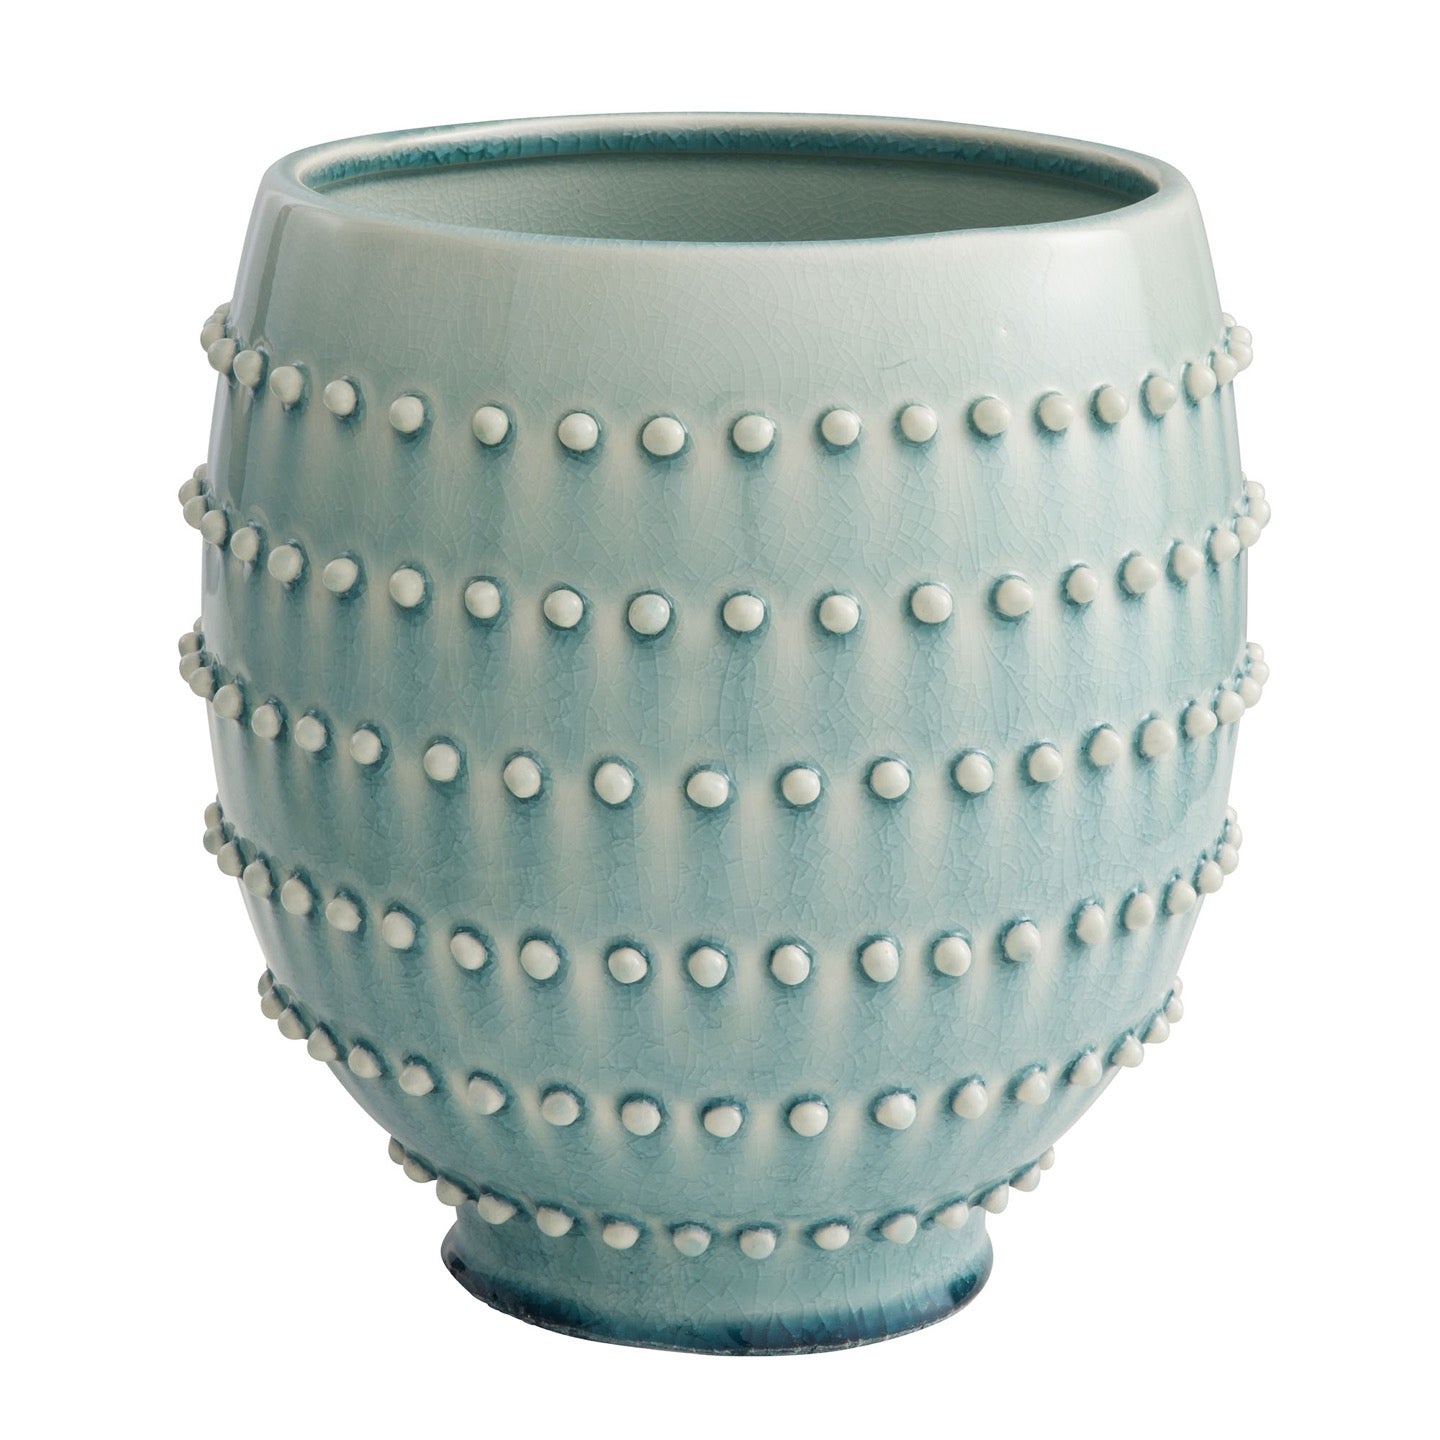 Spitzy Small Vase - Celadon